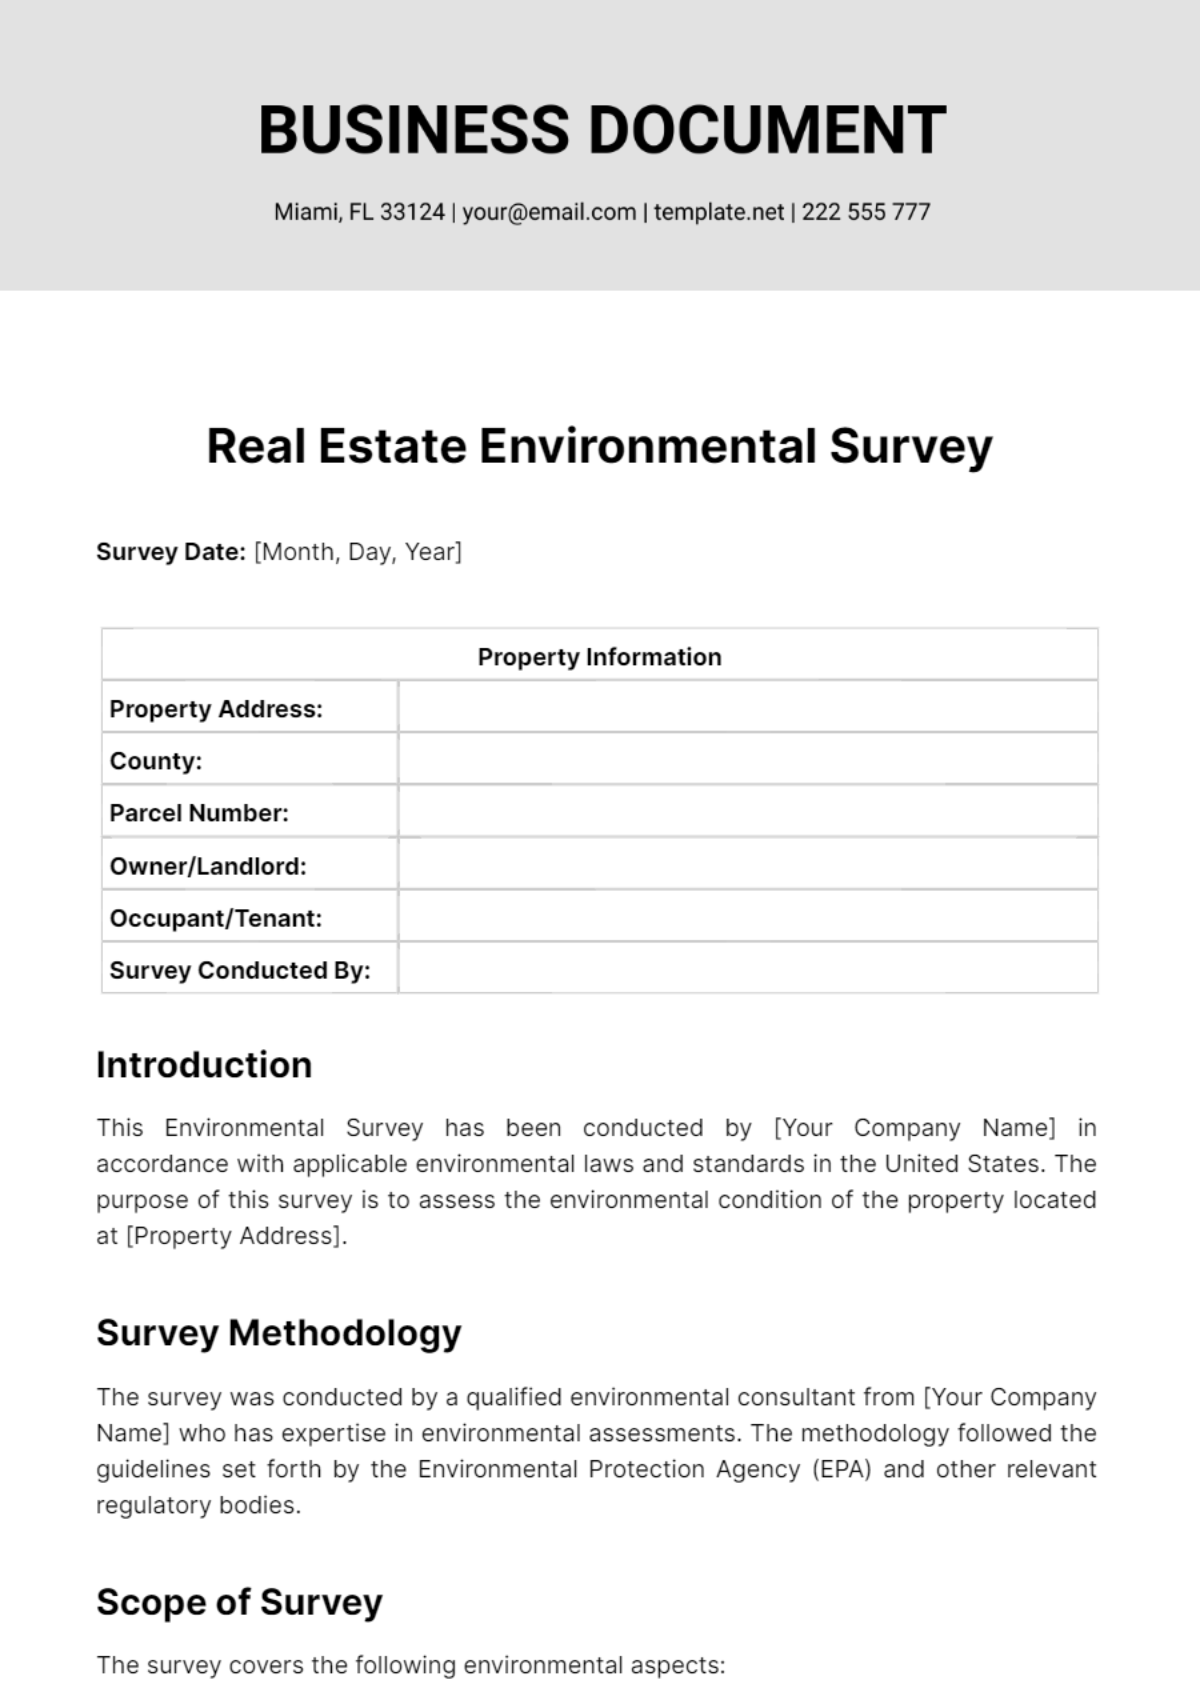 Real Estate Environmental Survey Template